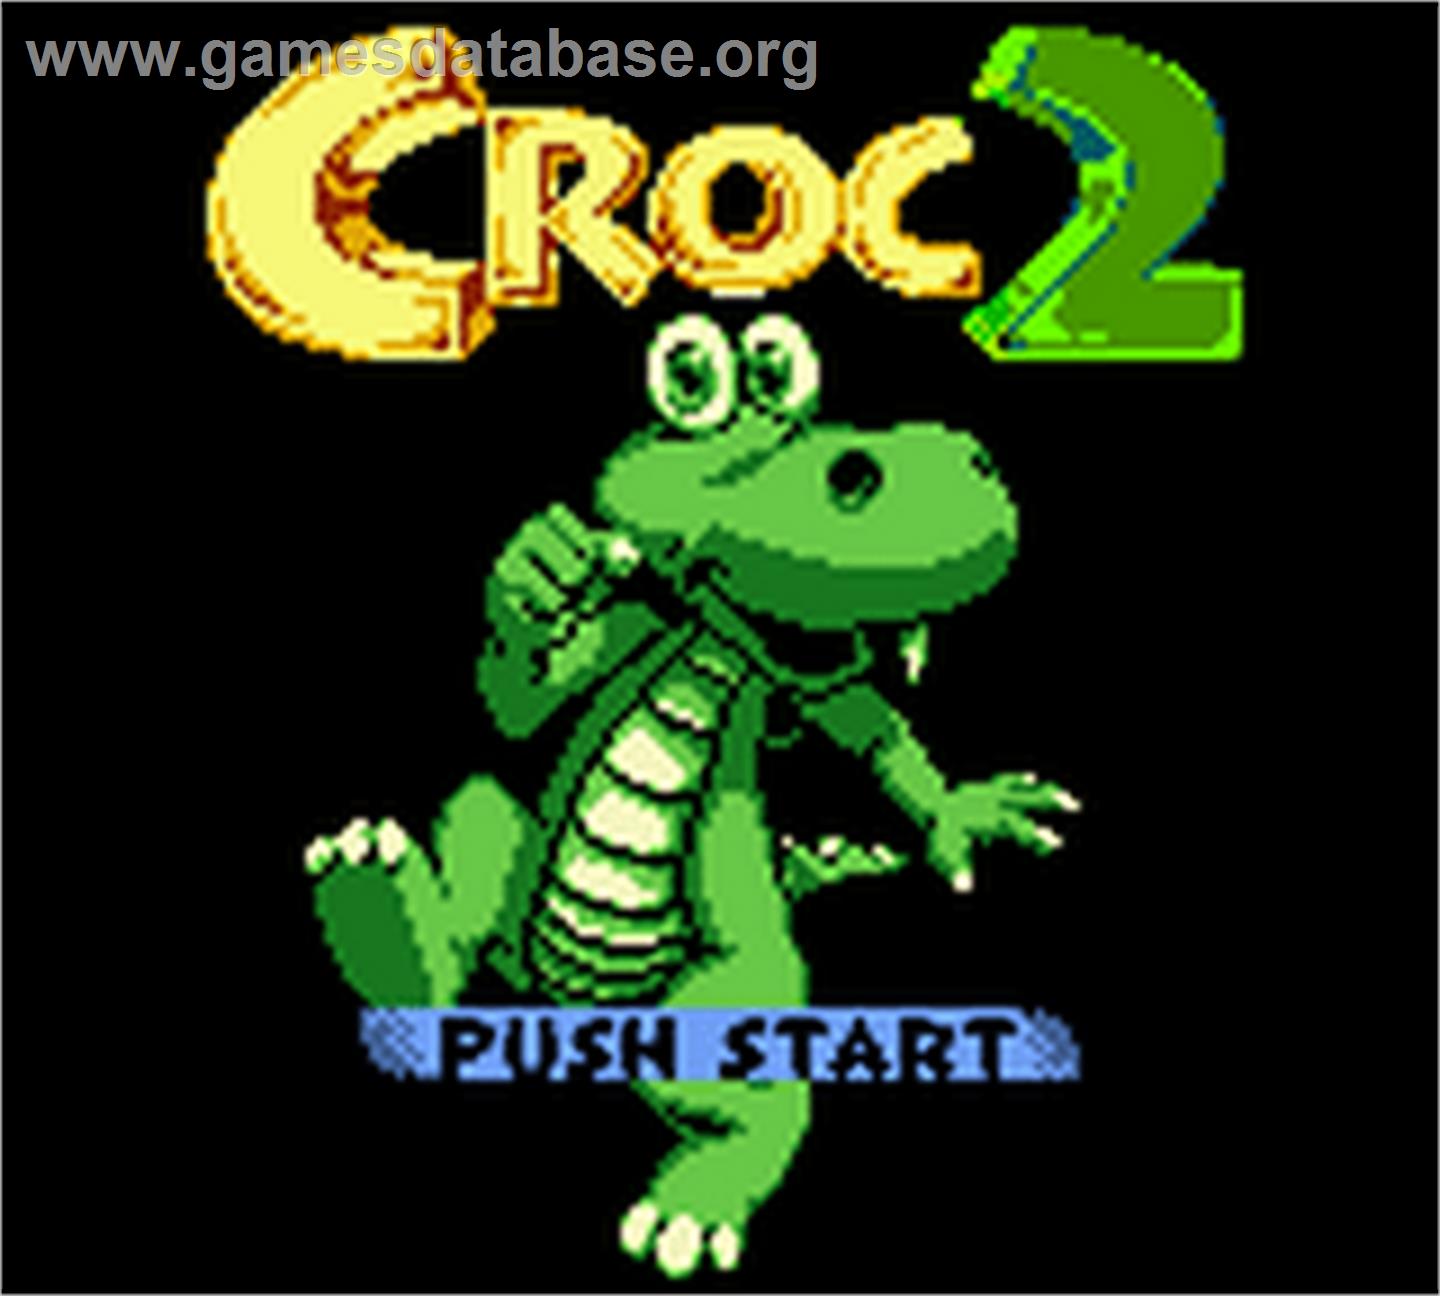 Croc 2 - Nintendo Game Boy Color - Artwork - Title Screen